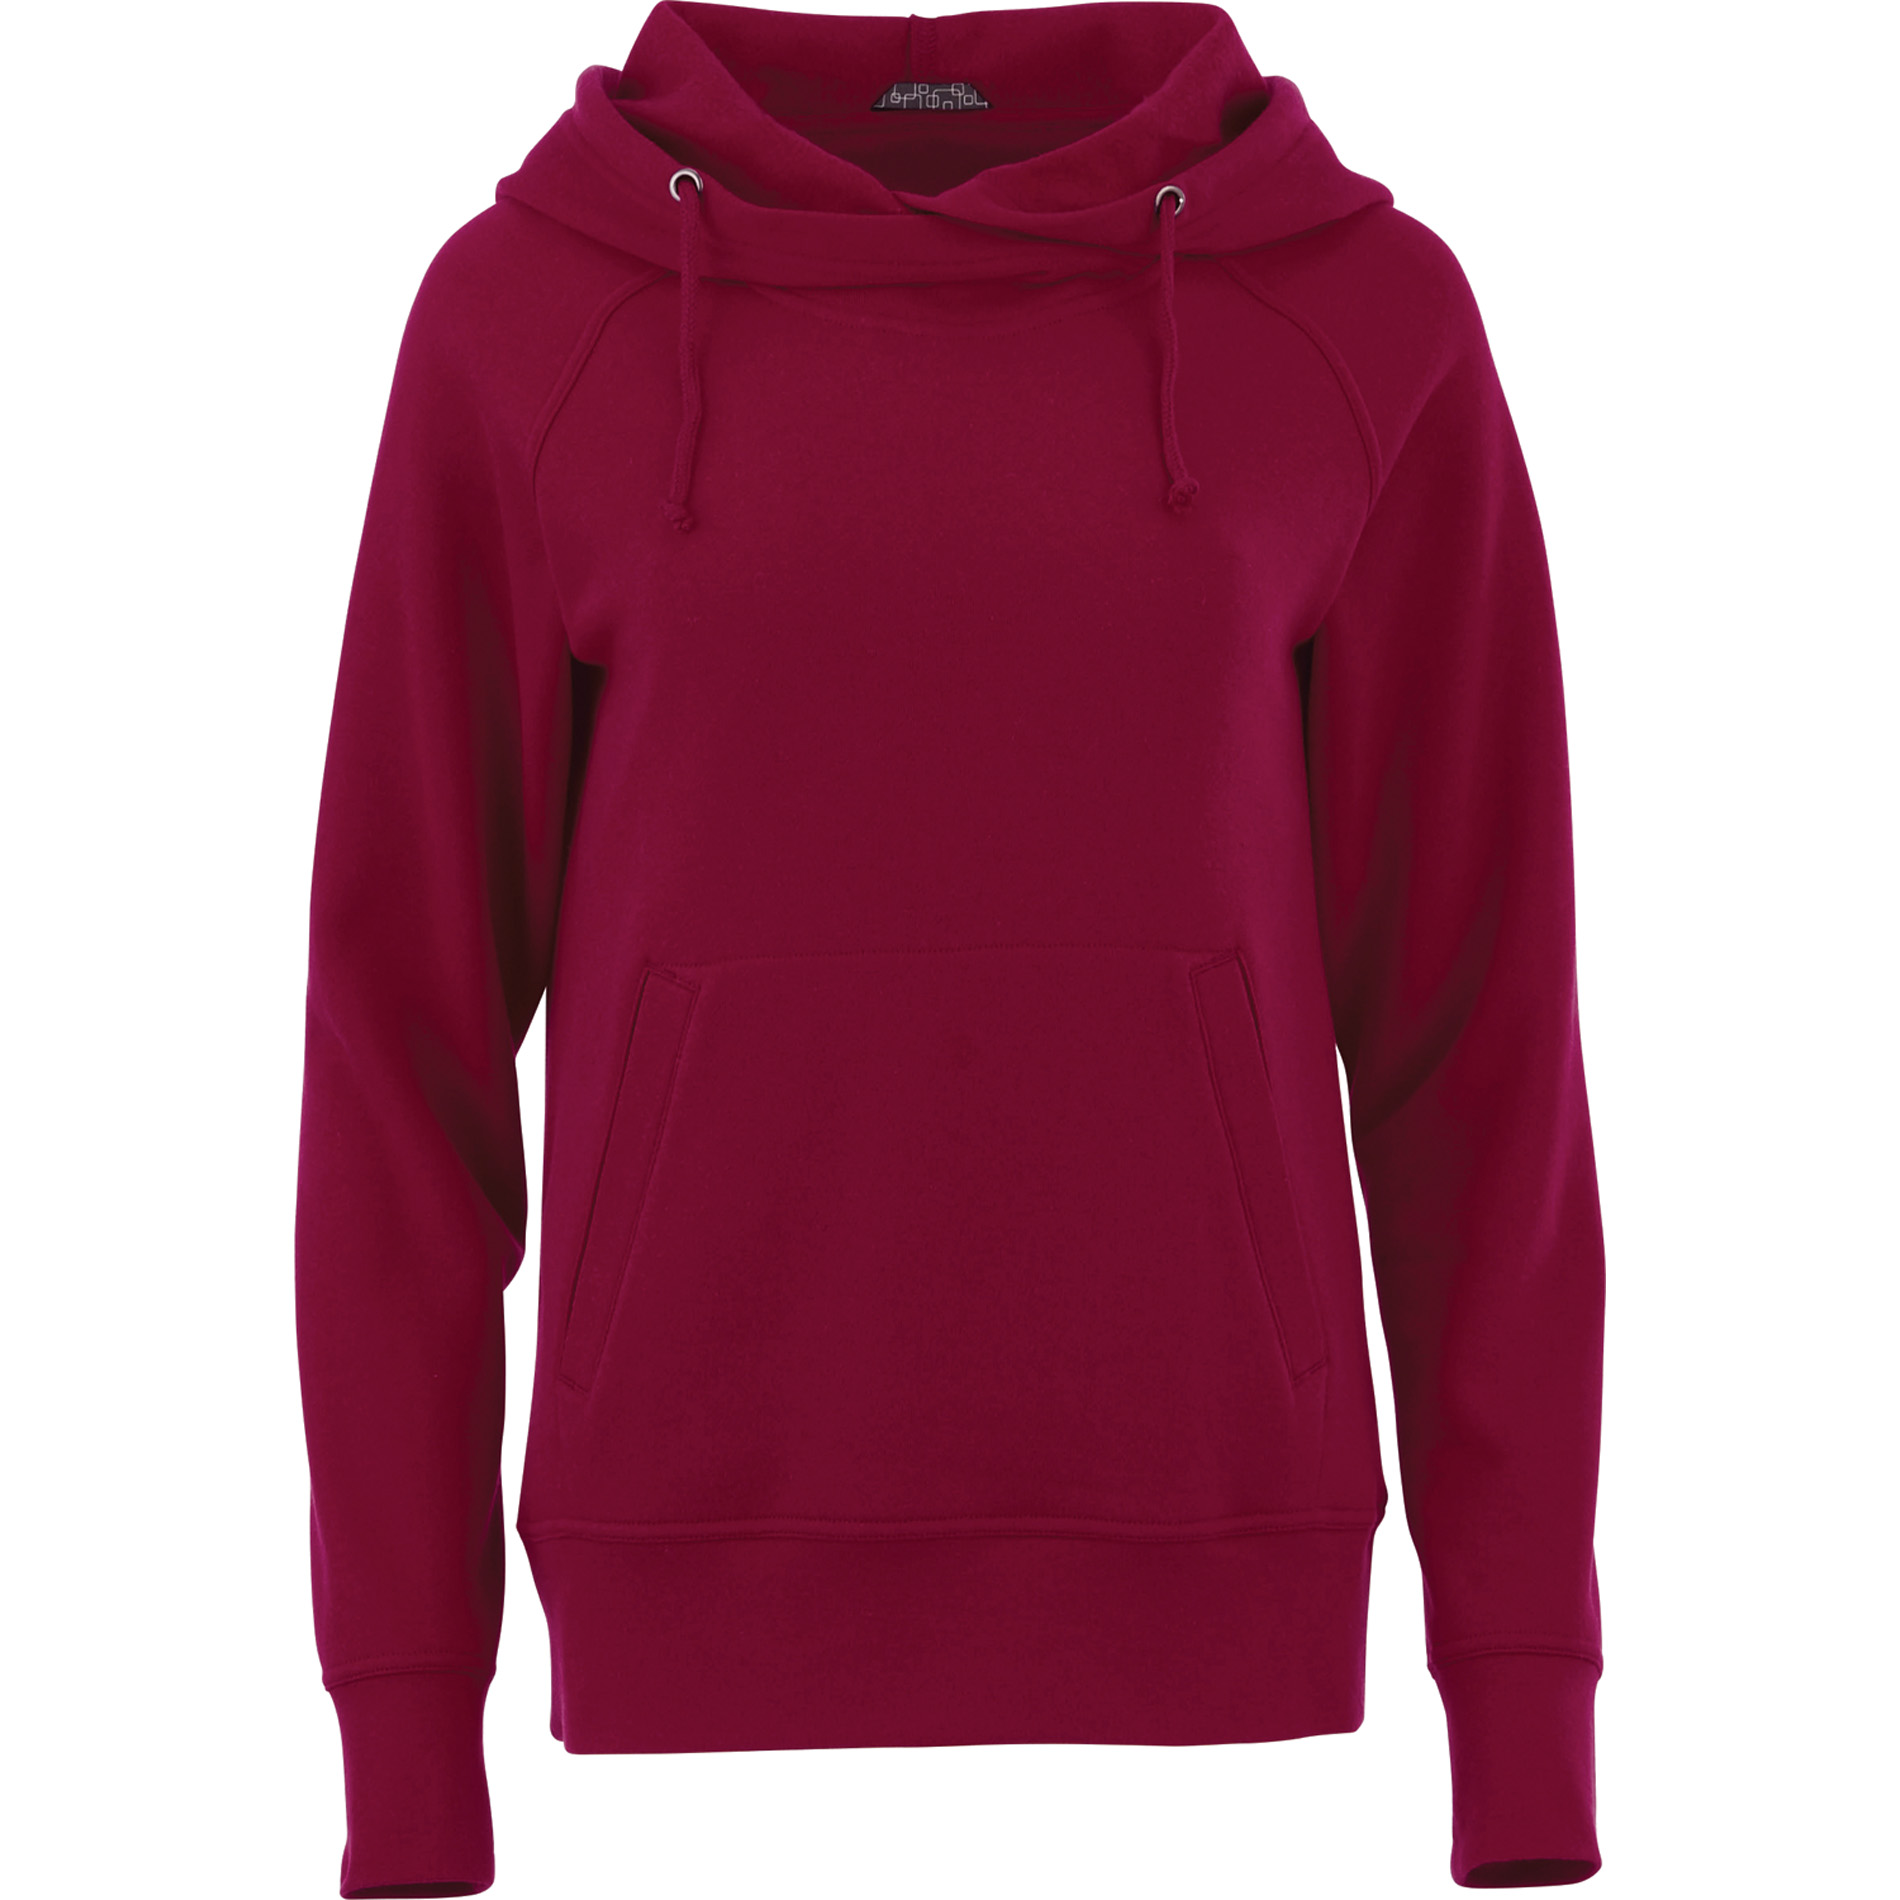 Trimark TM98209 - Women's DAYTON Fleece Hoodie $23.34 - Sweatshirts